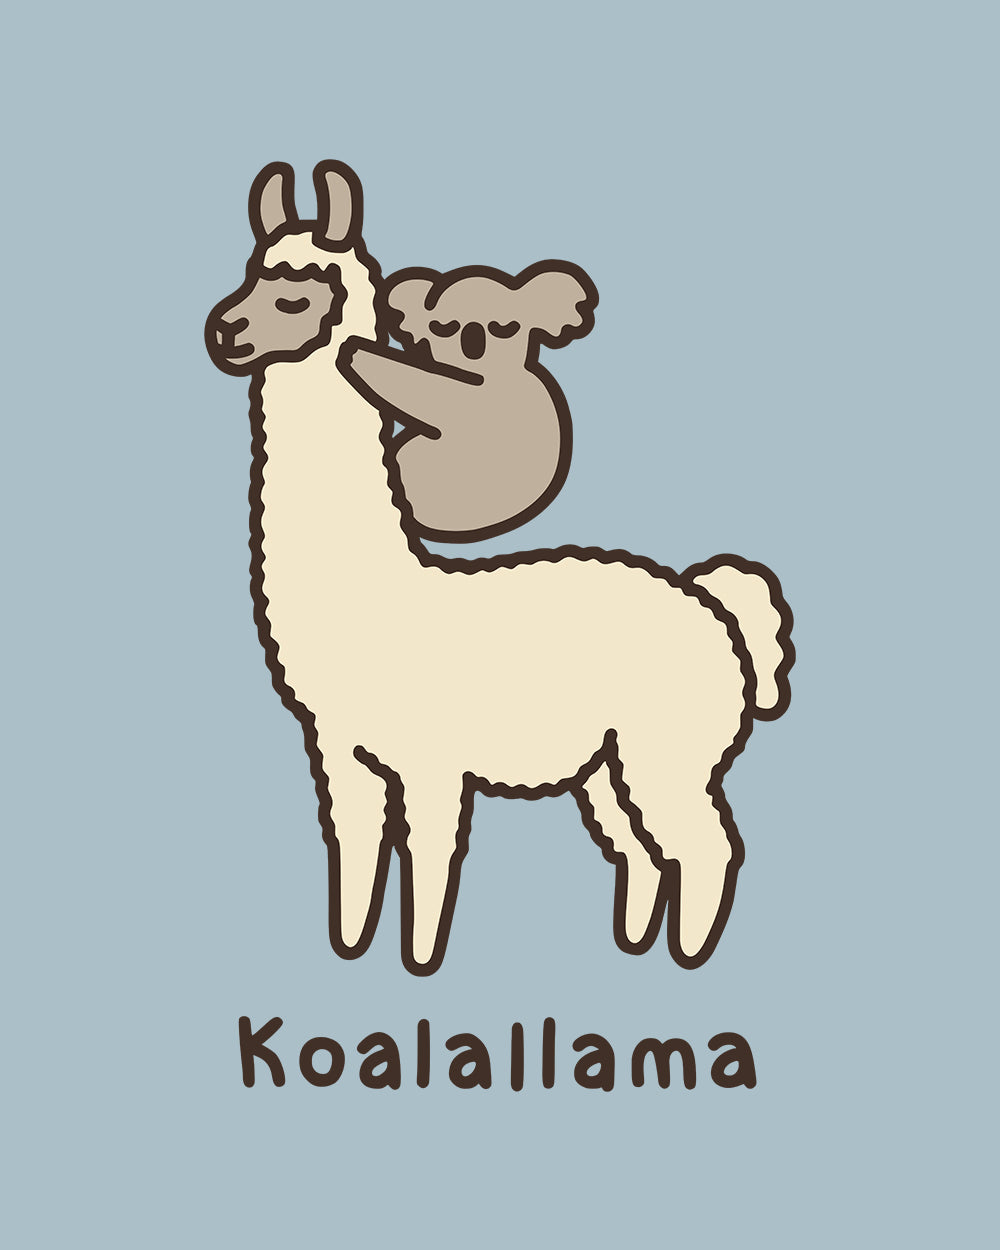 Koalallama Kids T-Shirt Australia Online #colour_pale blue